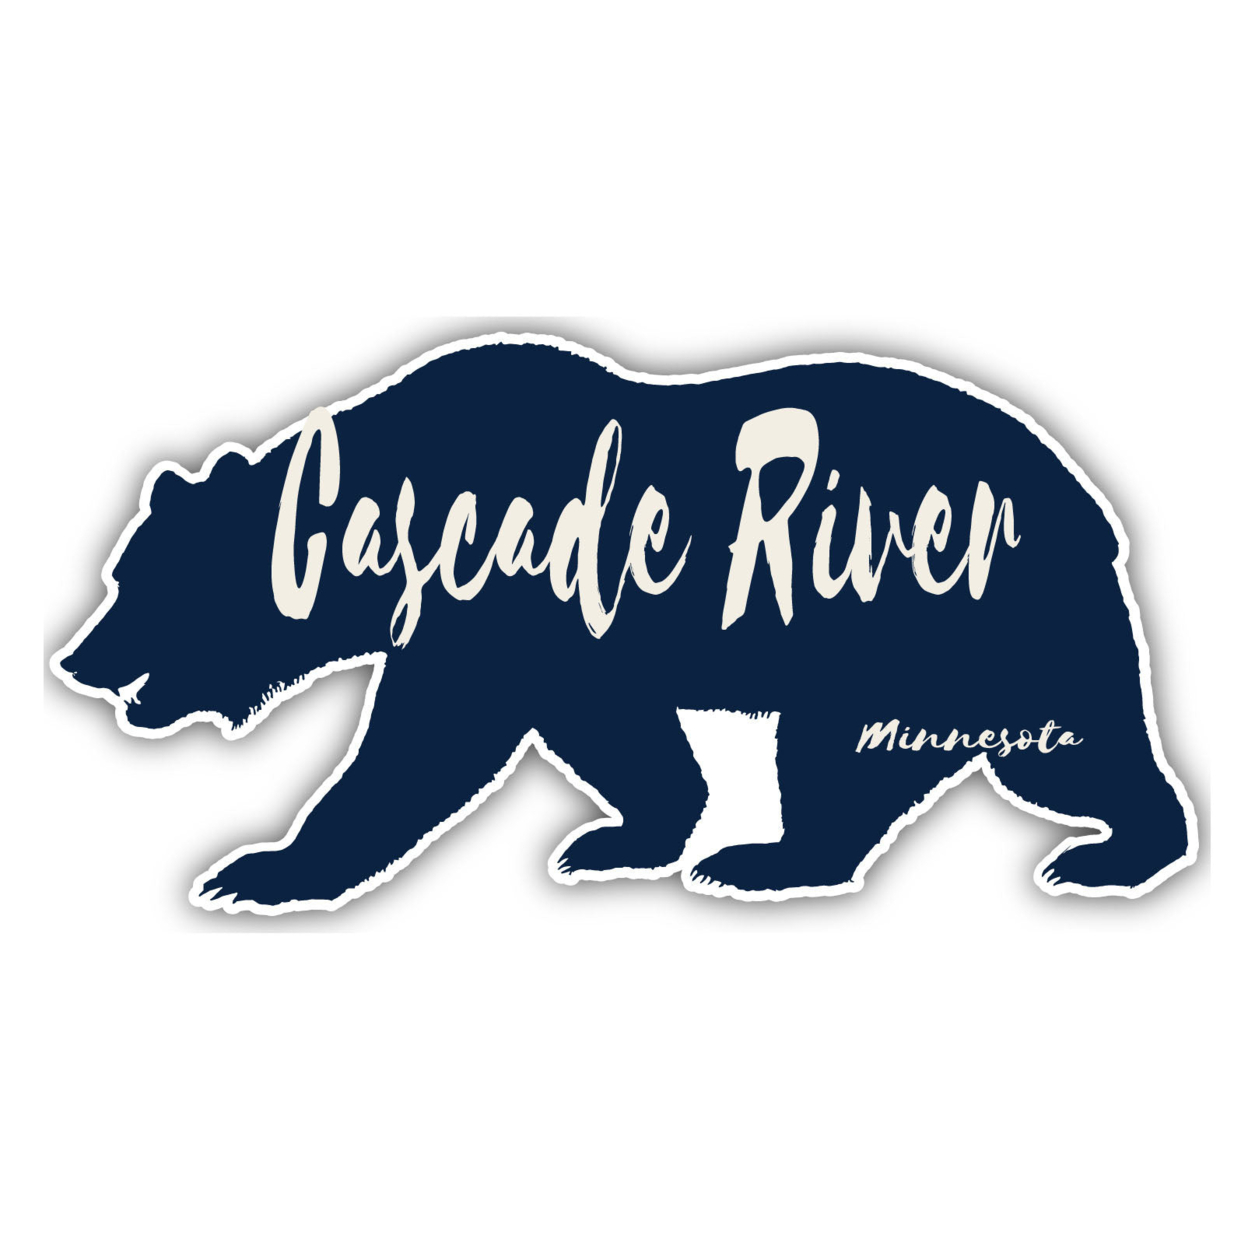 Cascade River Minnesota Souvenir Decorative Stickers (Choose Theme And Size) - Single Unit, 12-Inch, Bear